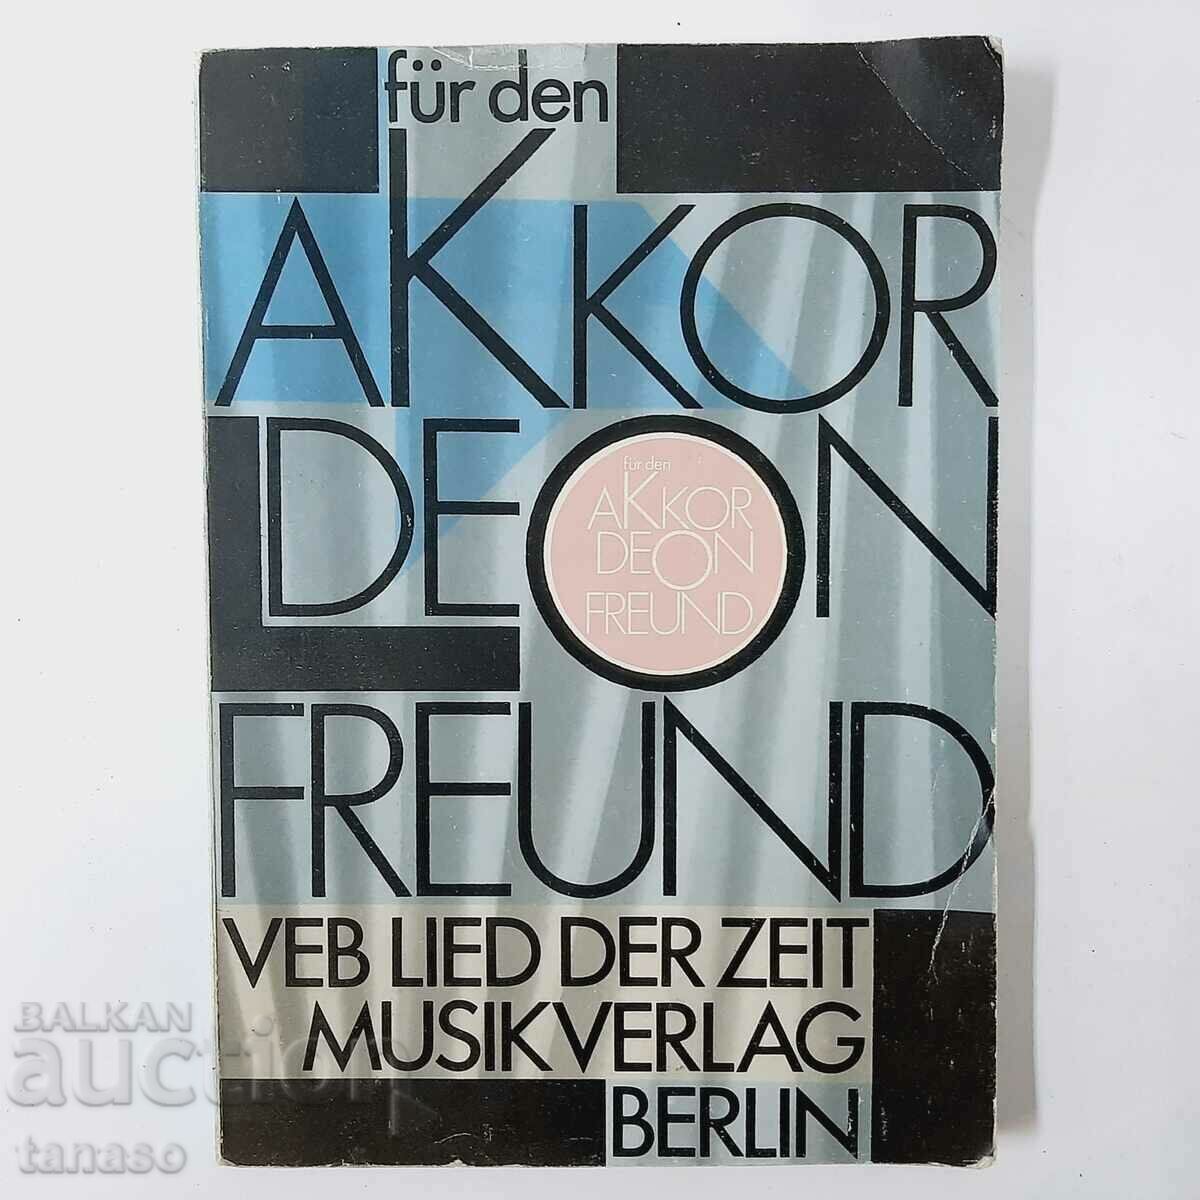 Akkordeon Freund, Collective(5.3)